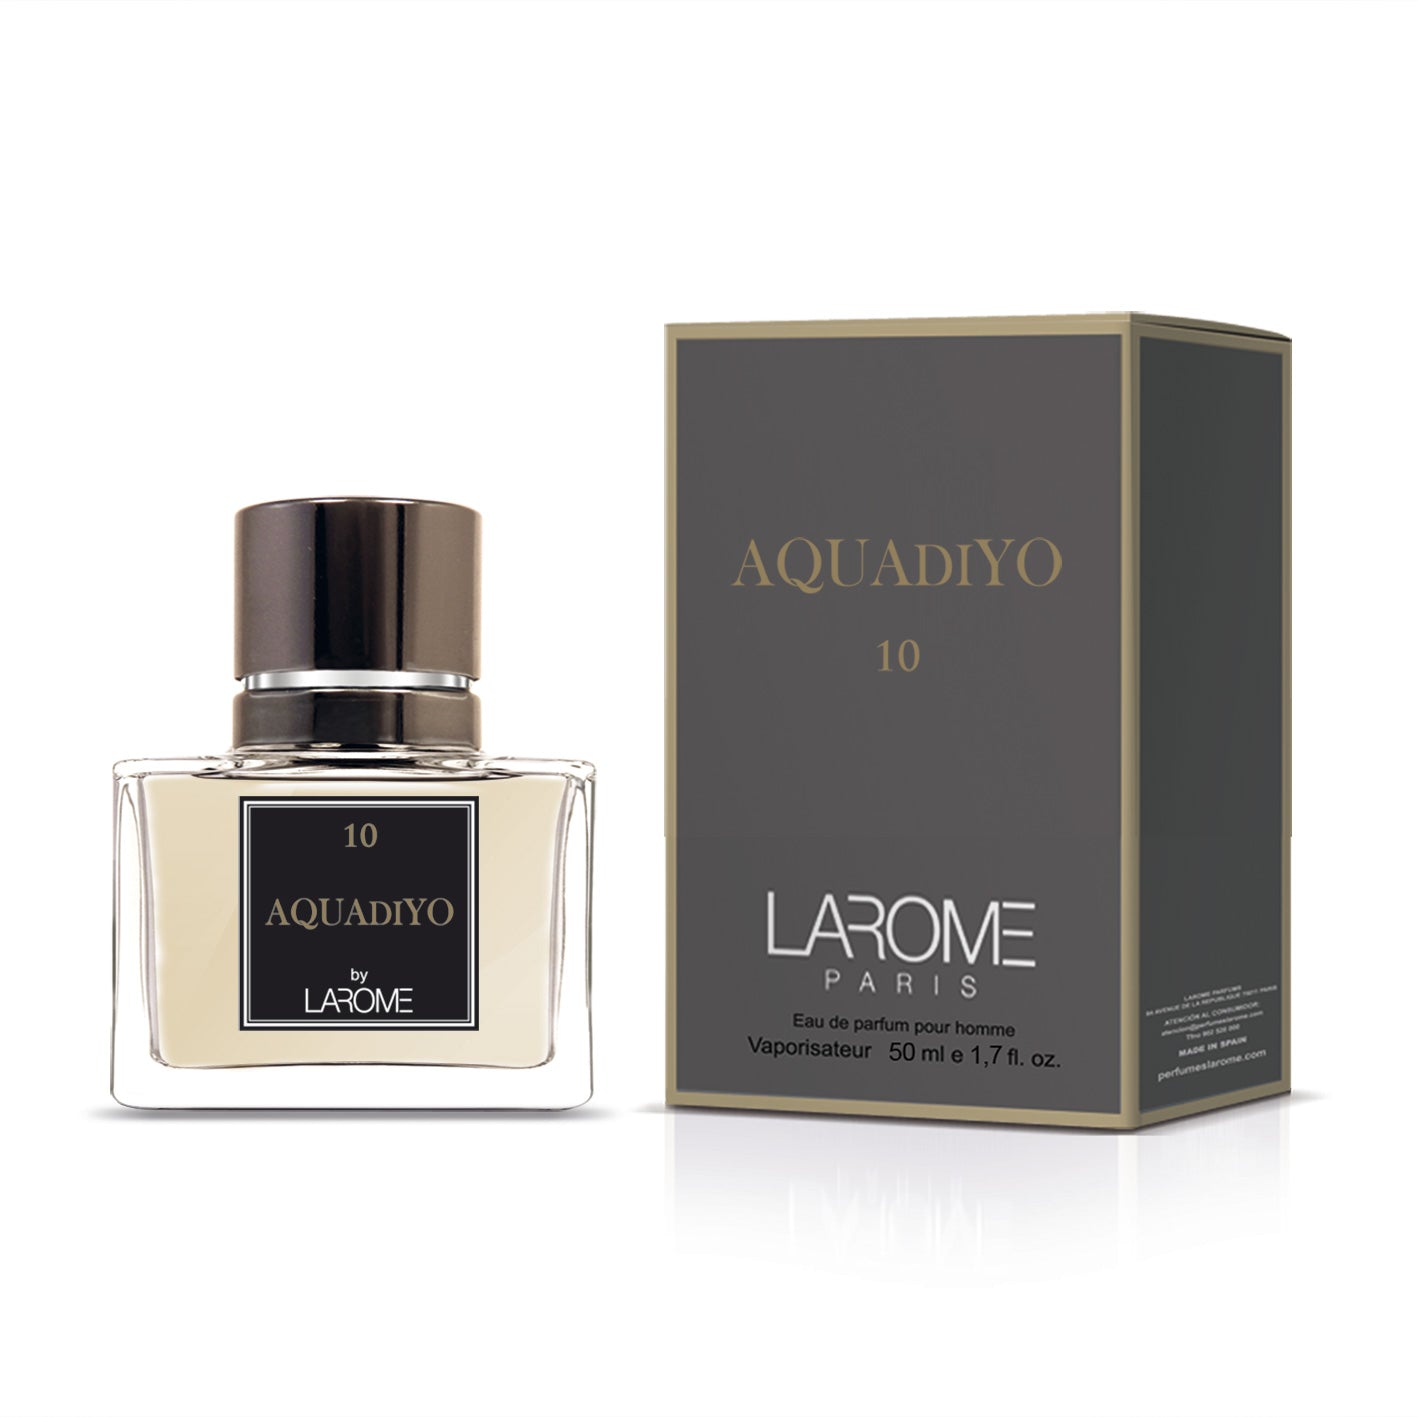 Aquadiyo 10M by Larome geïnspireerd door Acqua di Gio